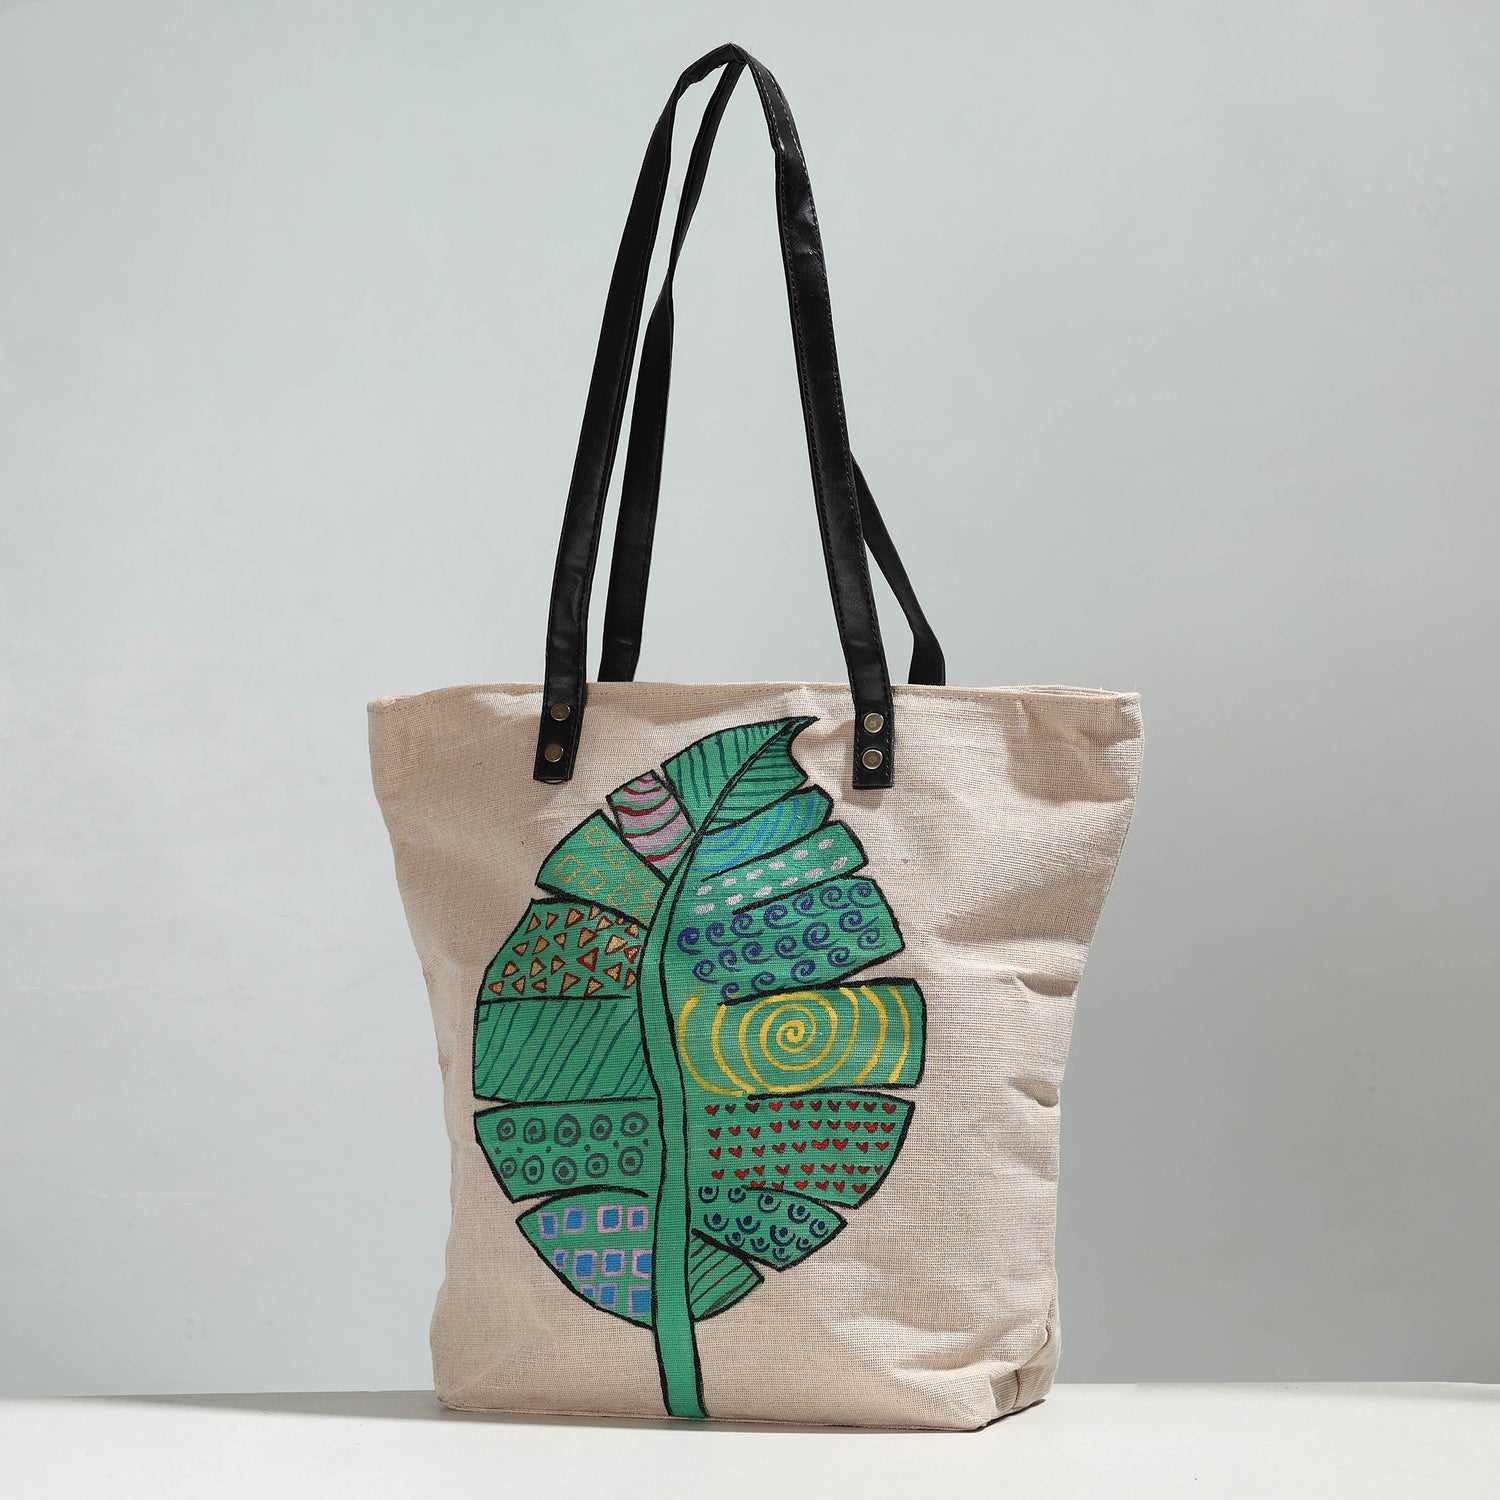 BRASIL Handbag Square Format in Handmade Macrame Cotton. TERRACOTA